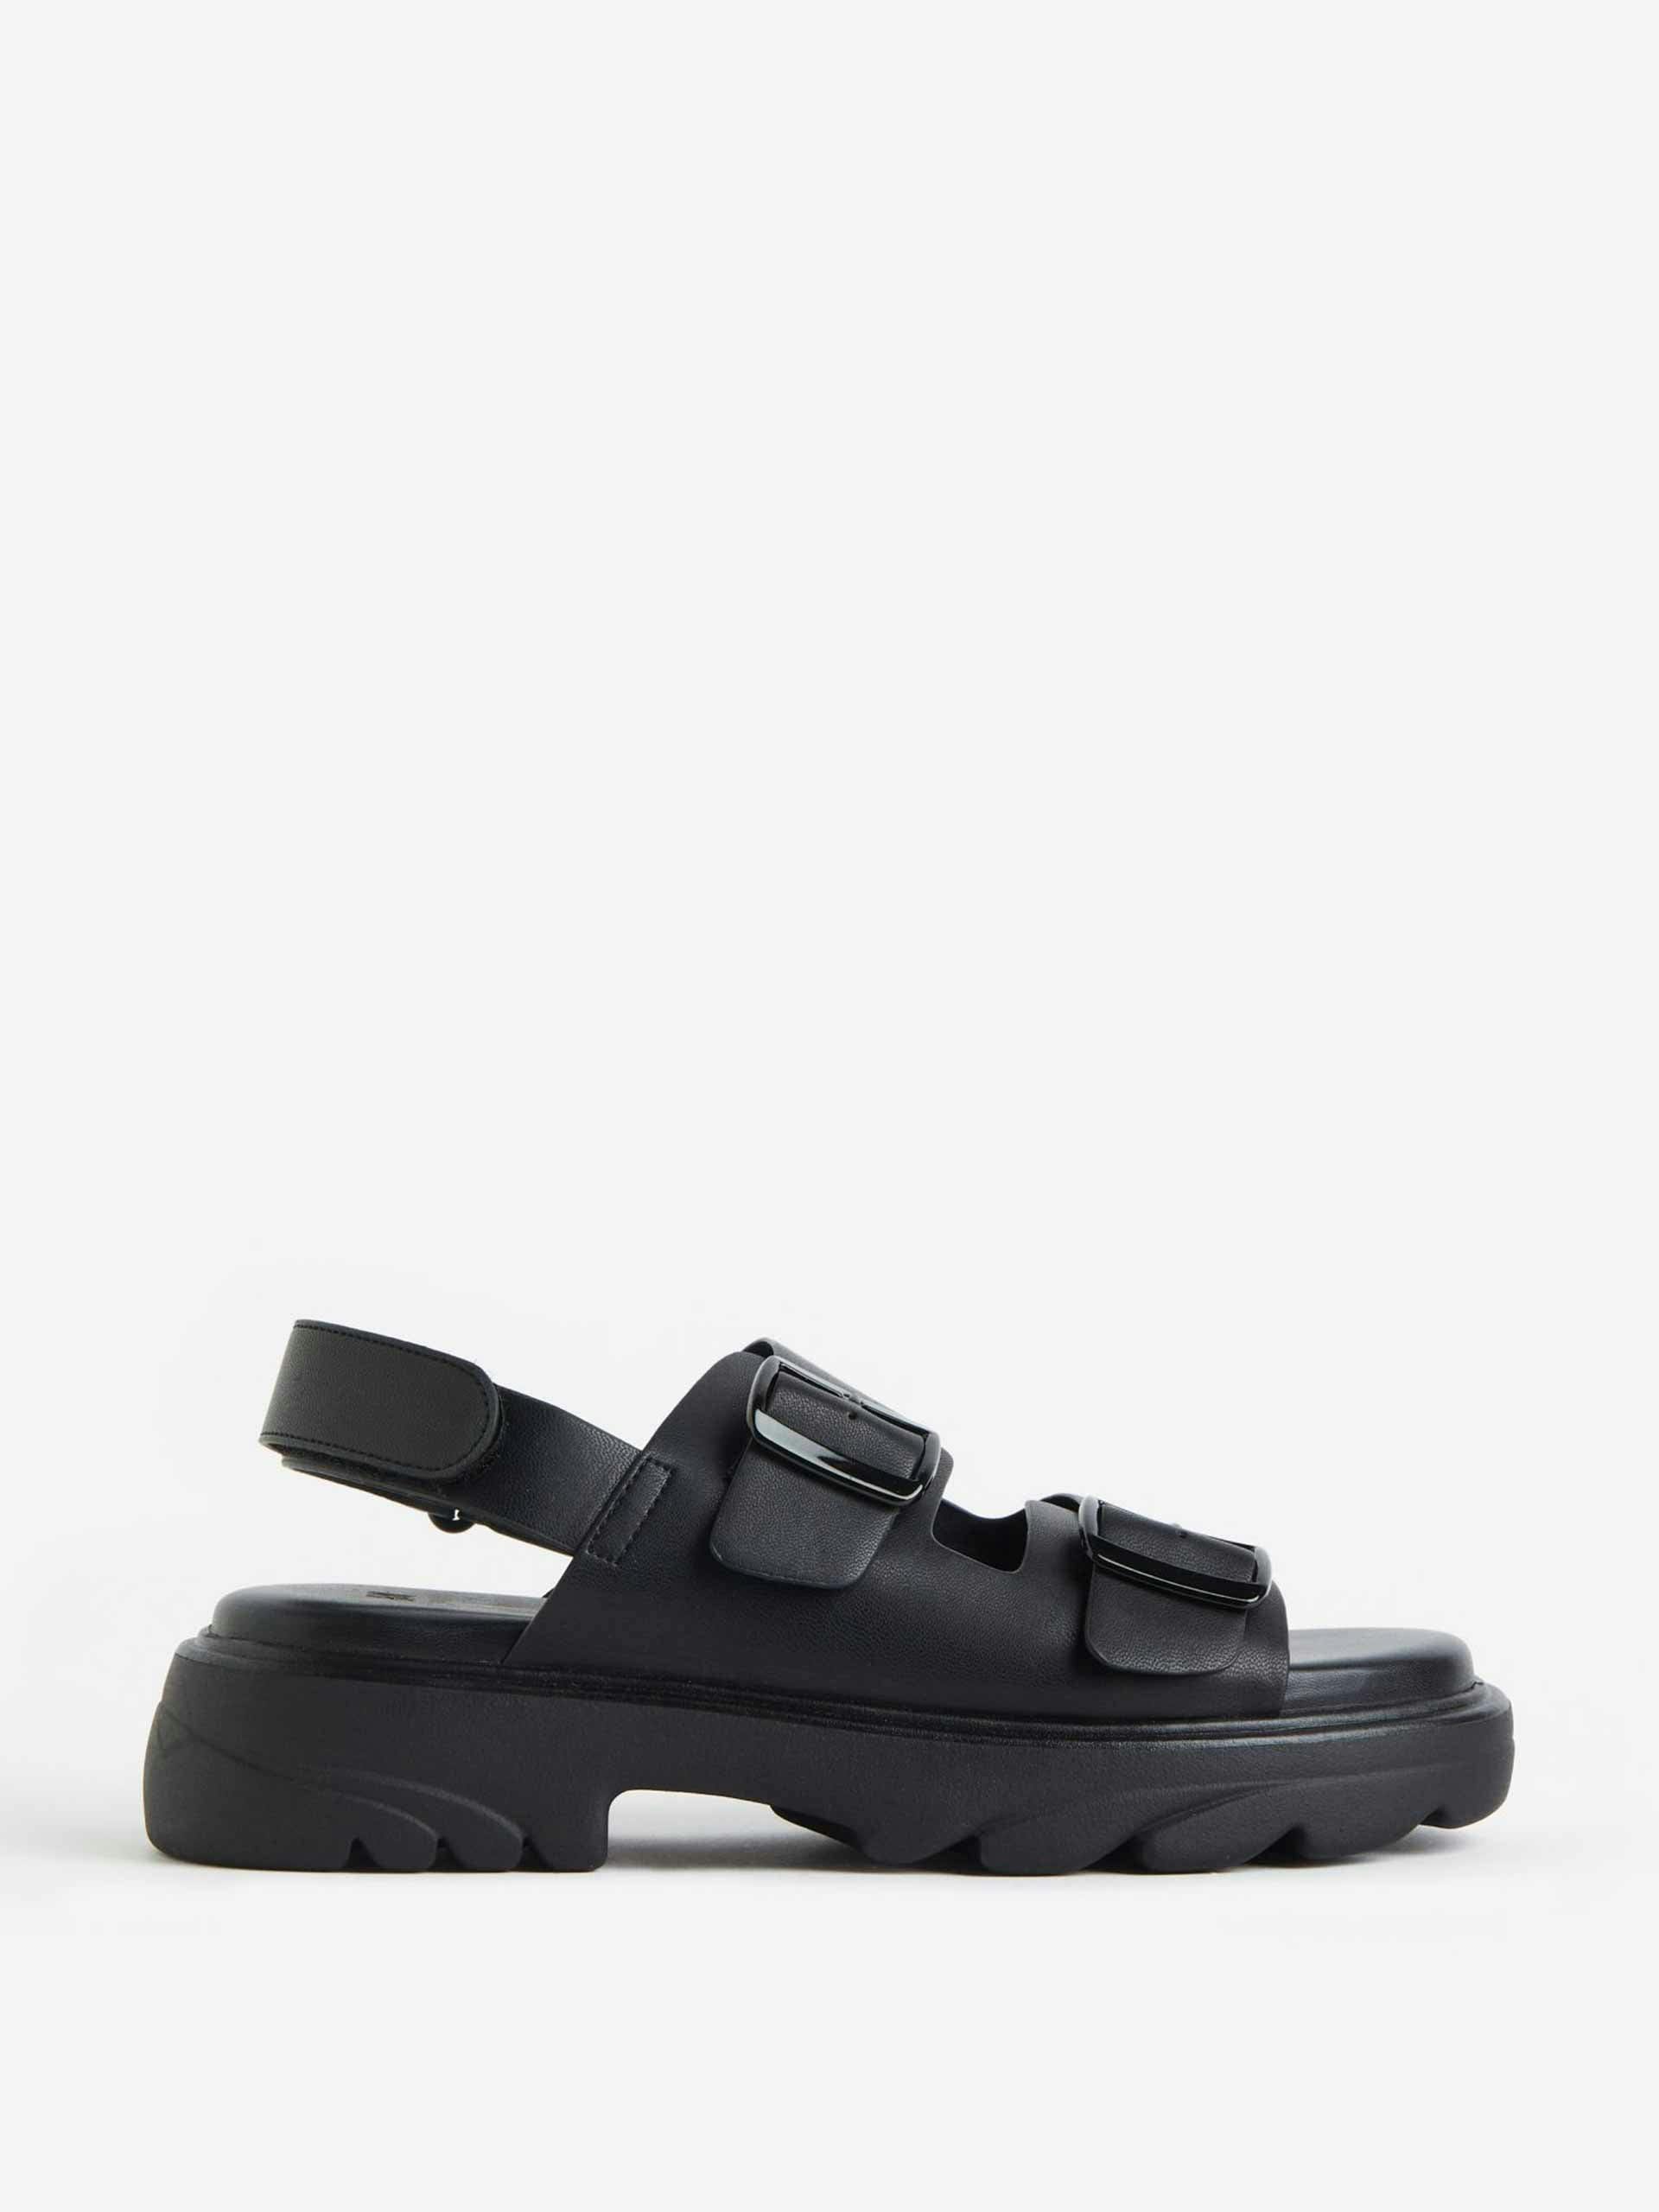 Black open-toe chunky sandals